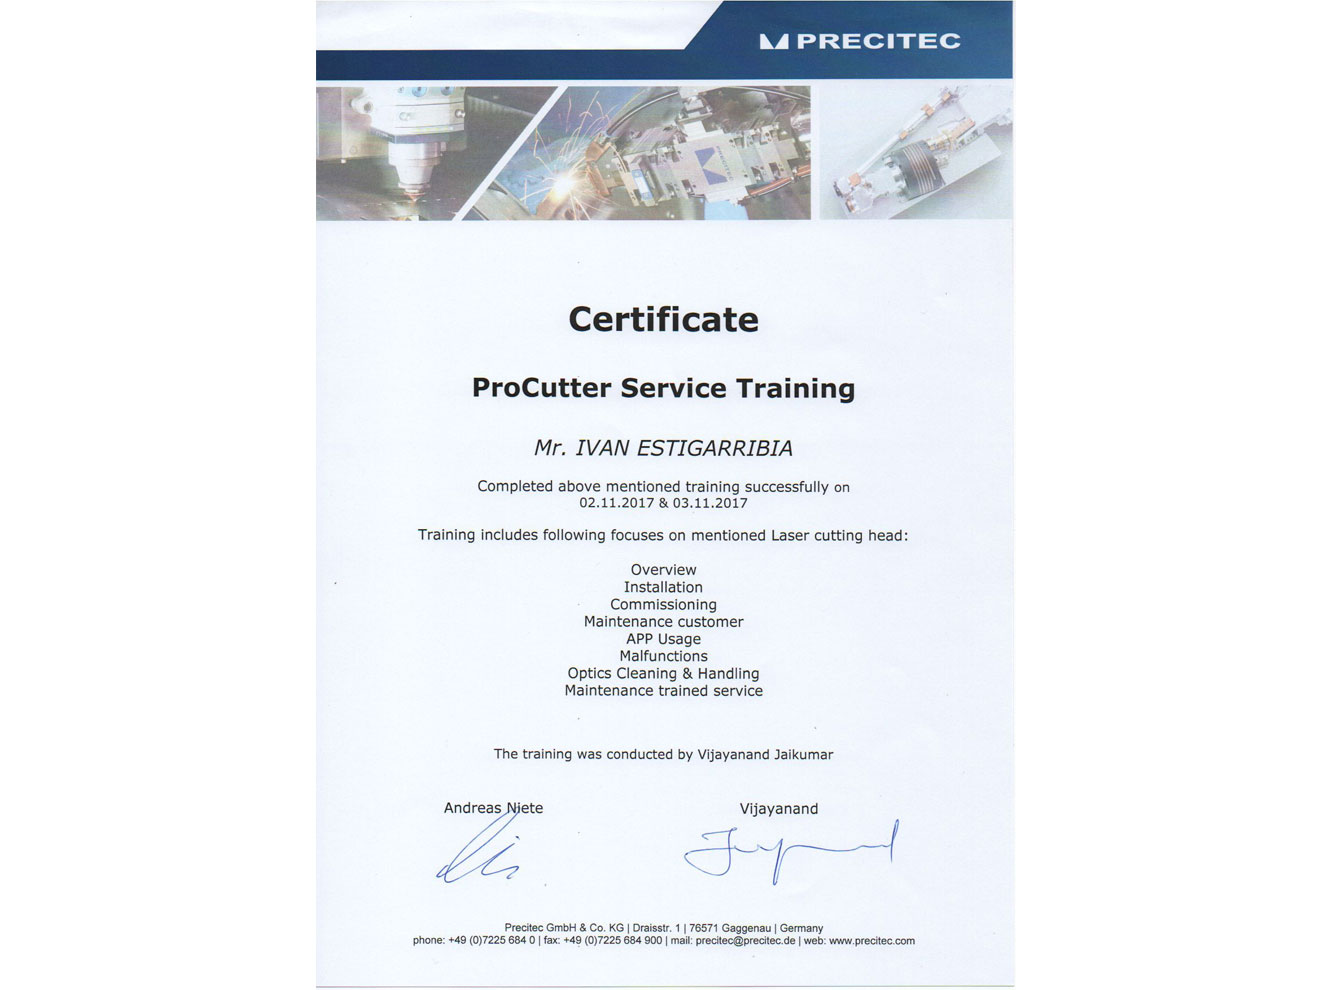 c7243-precitec-certificate.jpg